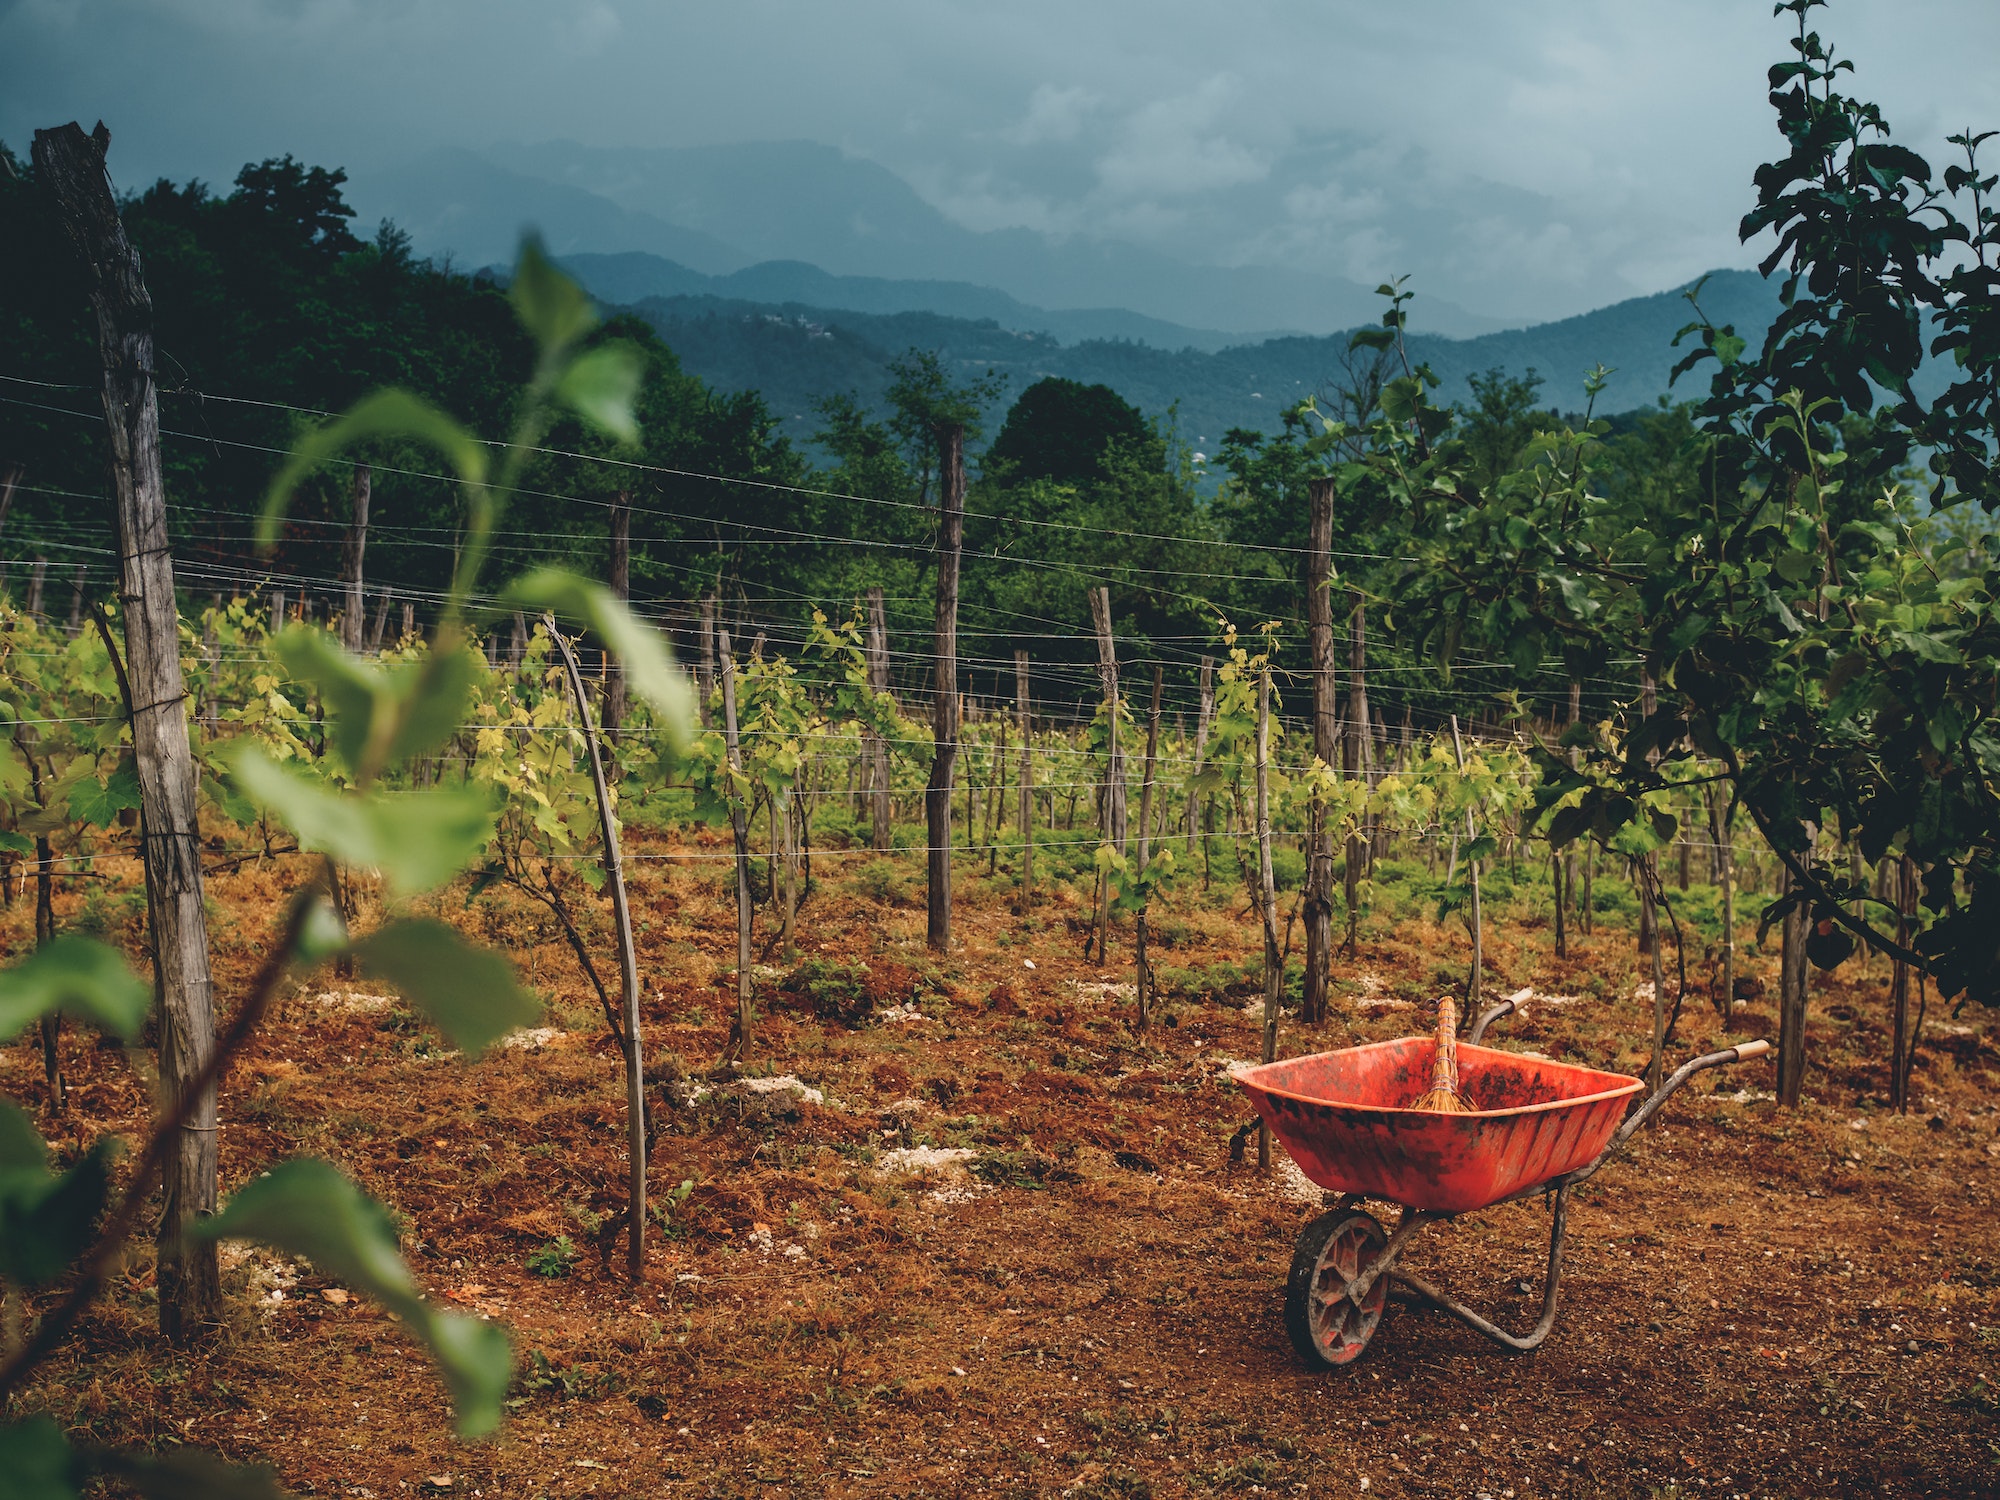 beautiful vineyard, stormy sky and cart on ground in georgia